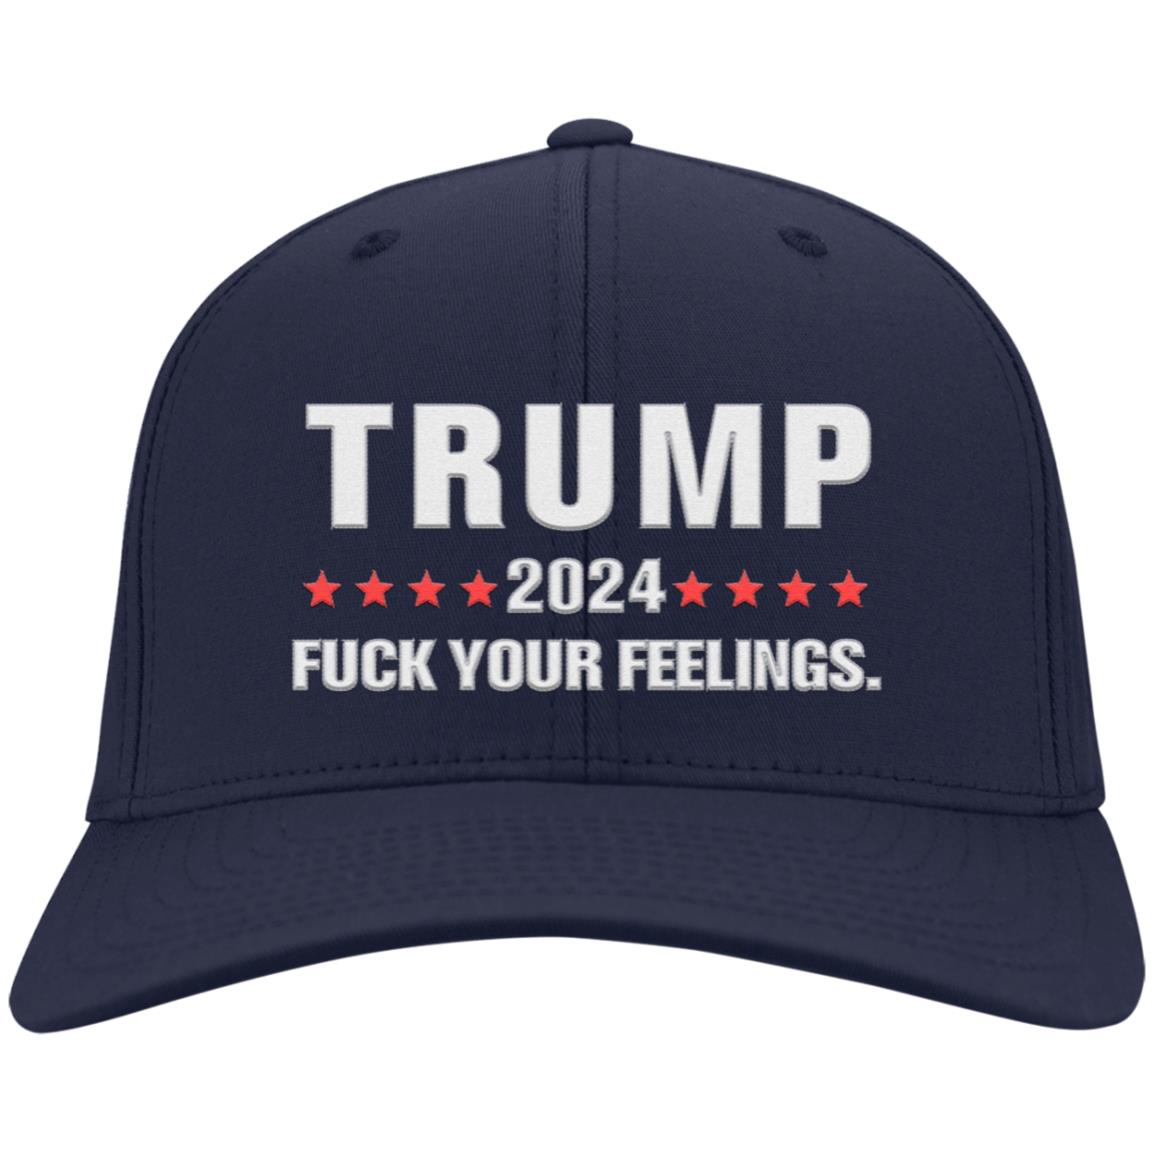 Tr*mp 2024 f*ck your feelings hat cap 1